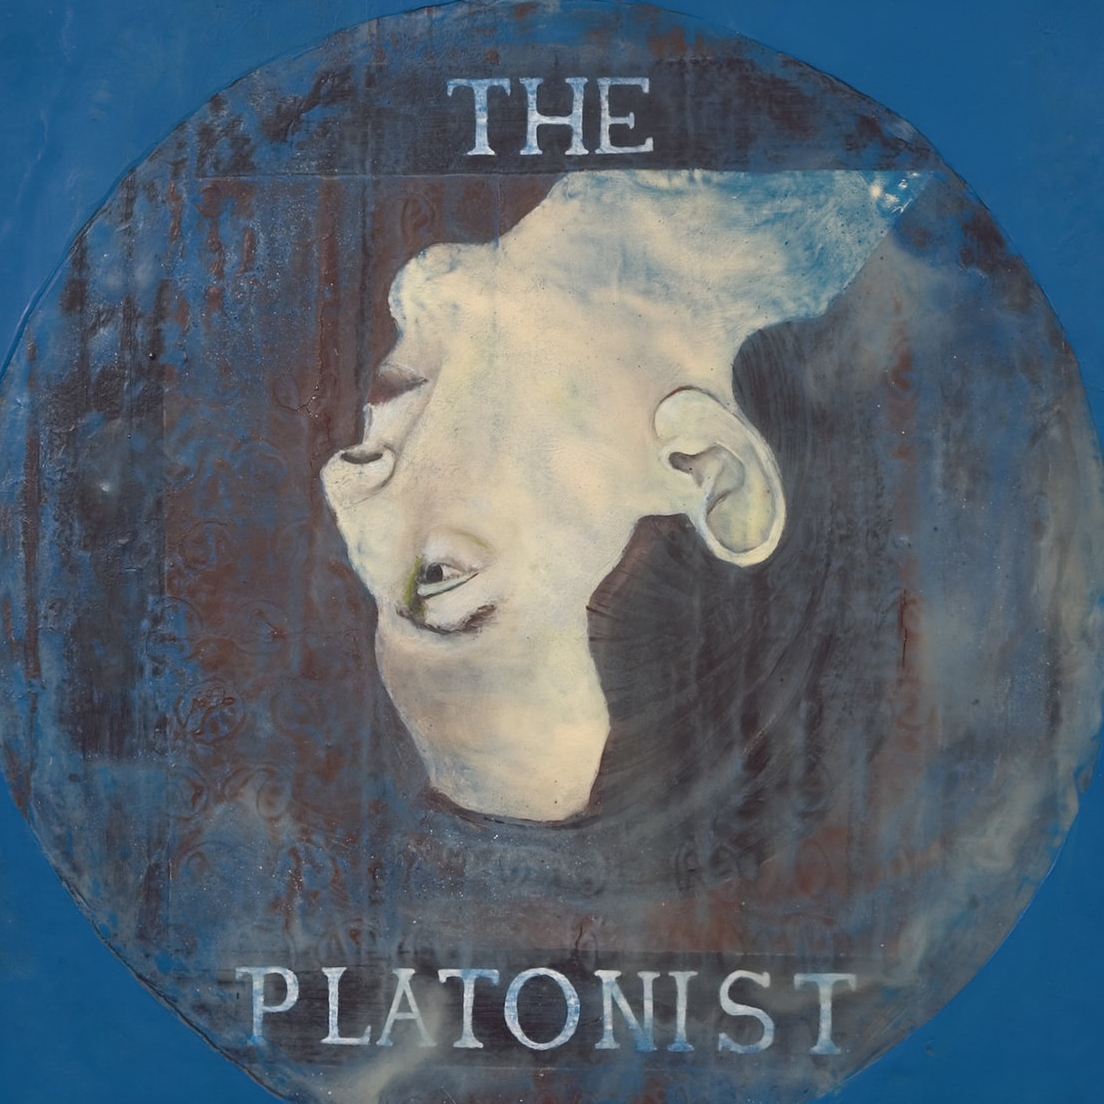 The Platonist